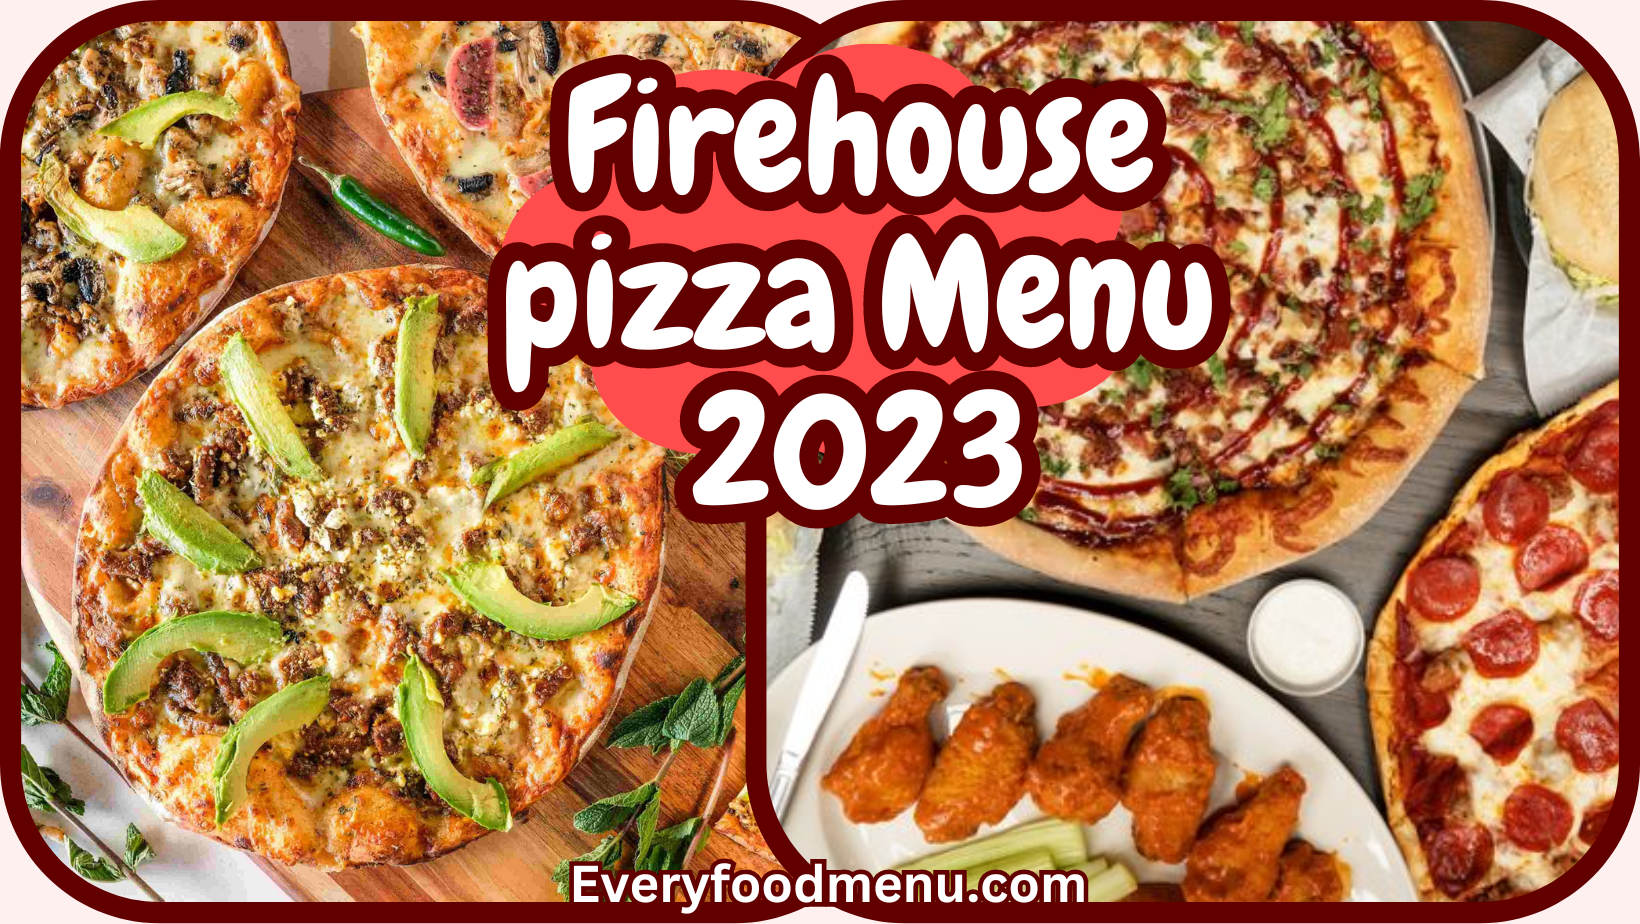 Firehouse pizza Menu 2023